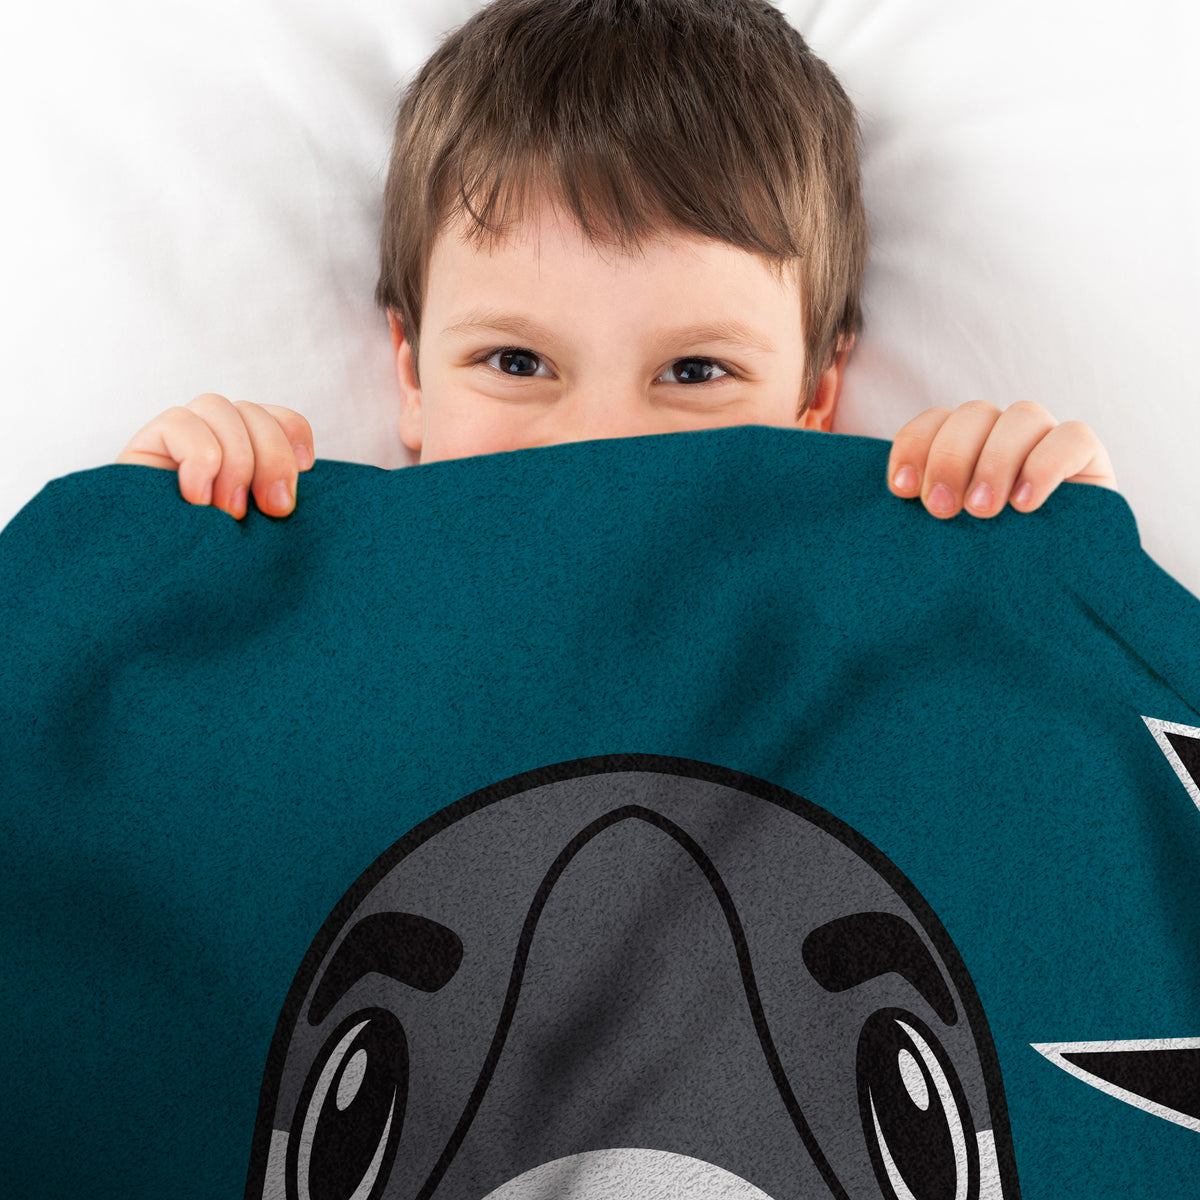 San Jose Sharks SJ Sharkie Mascot 60” x 80” Plush Blanket